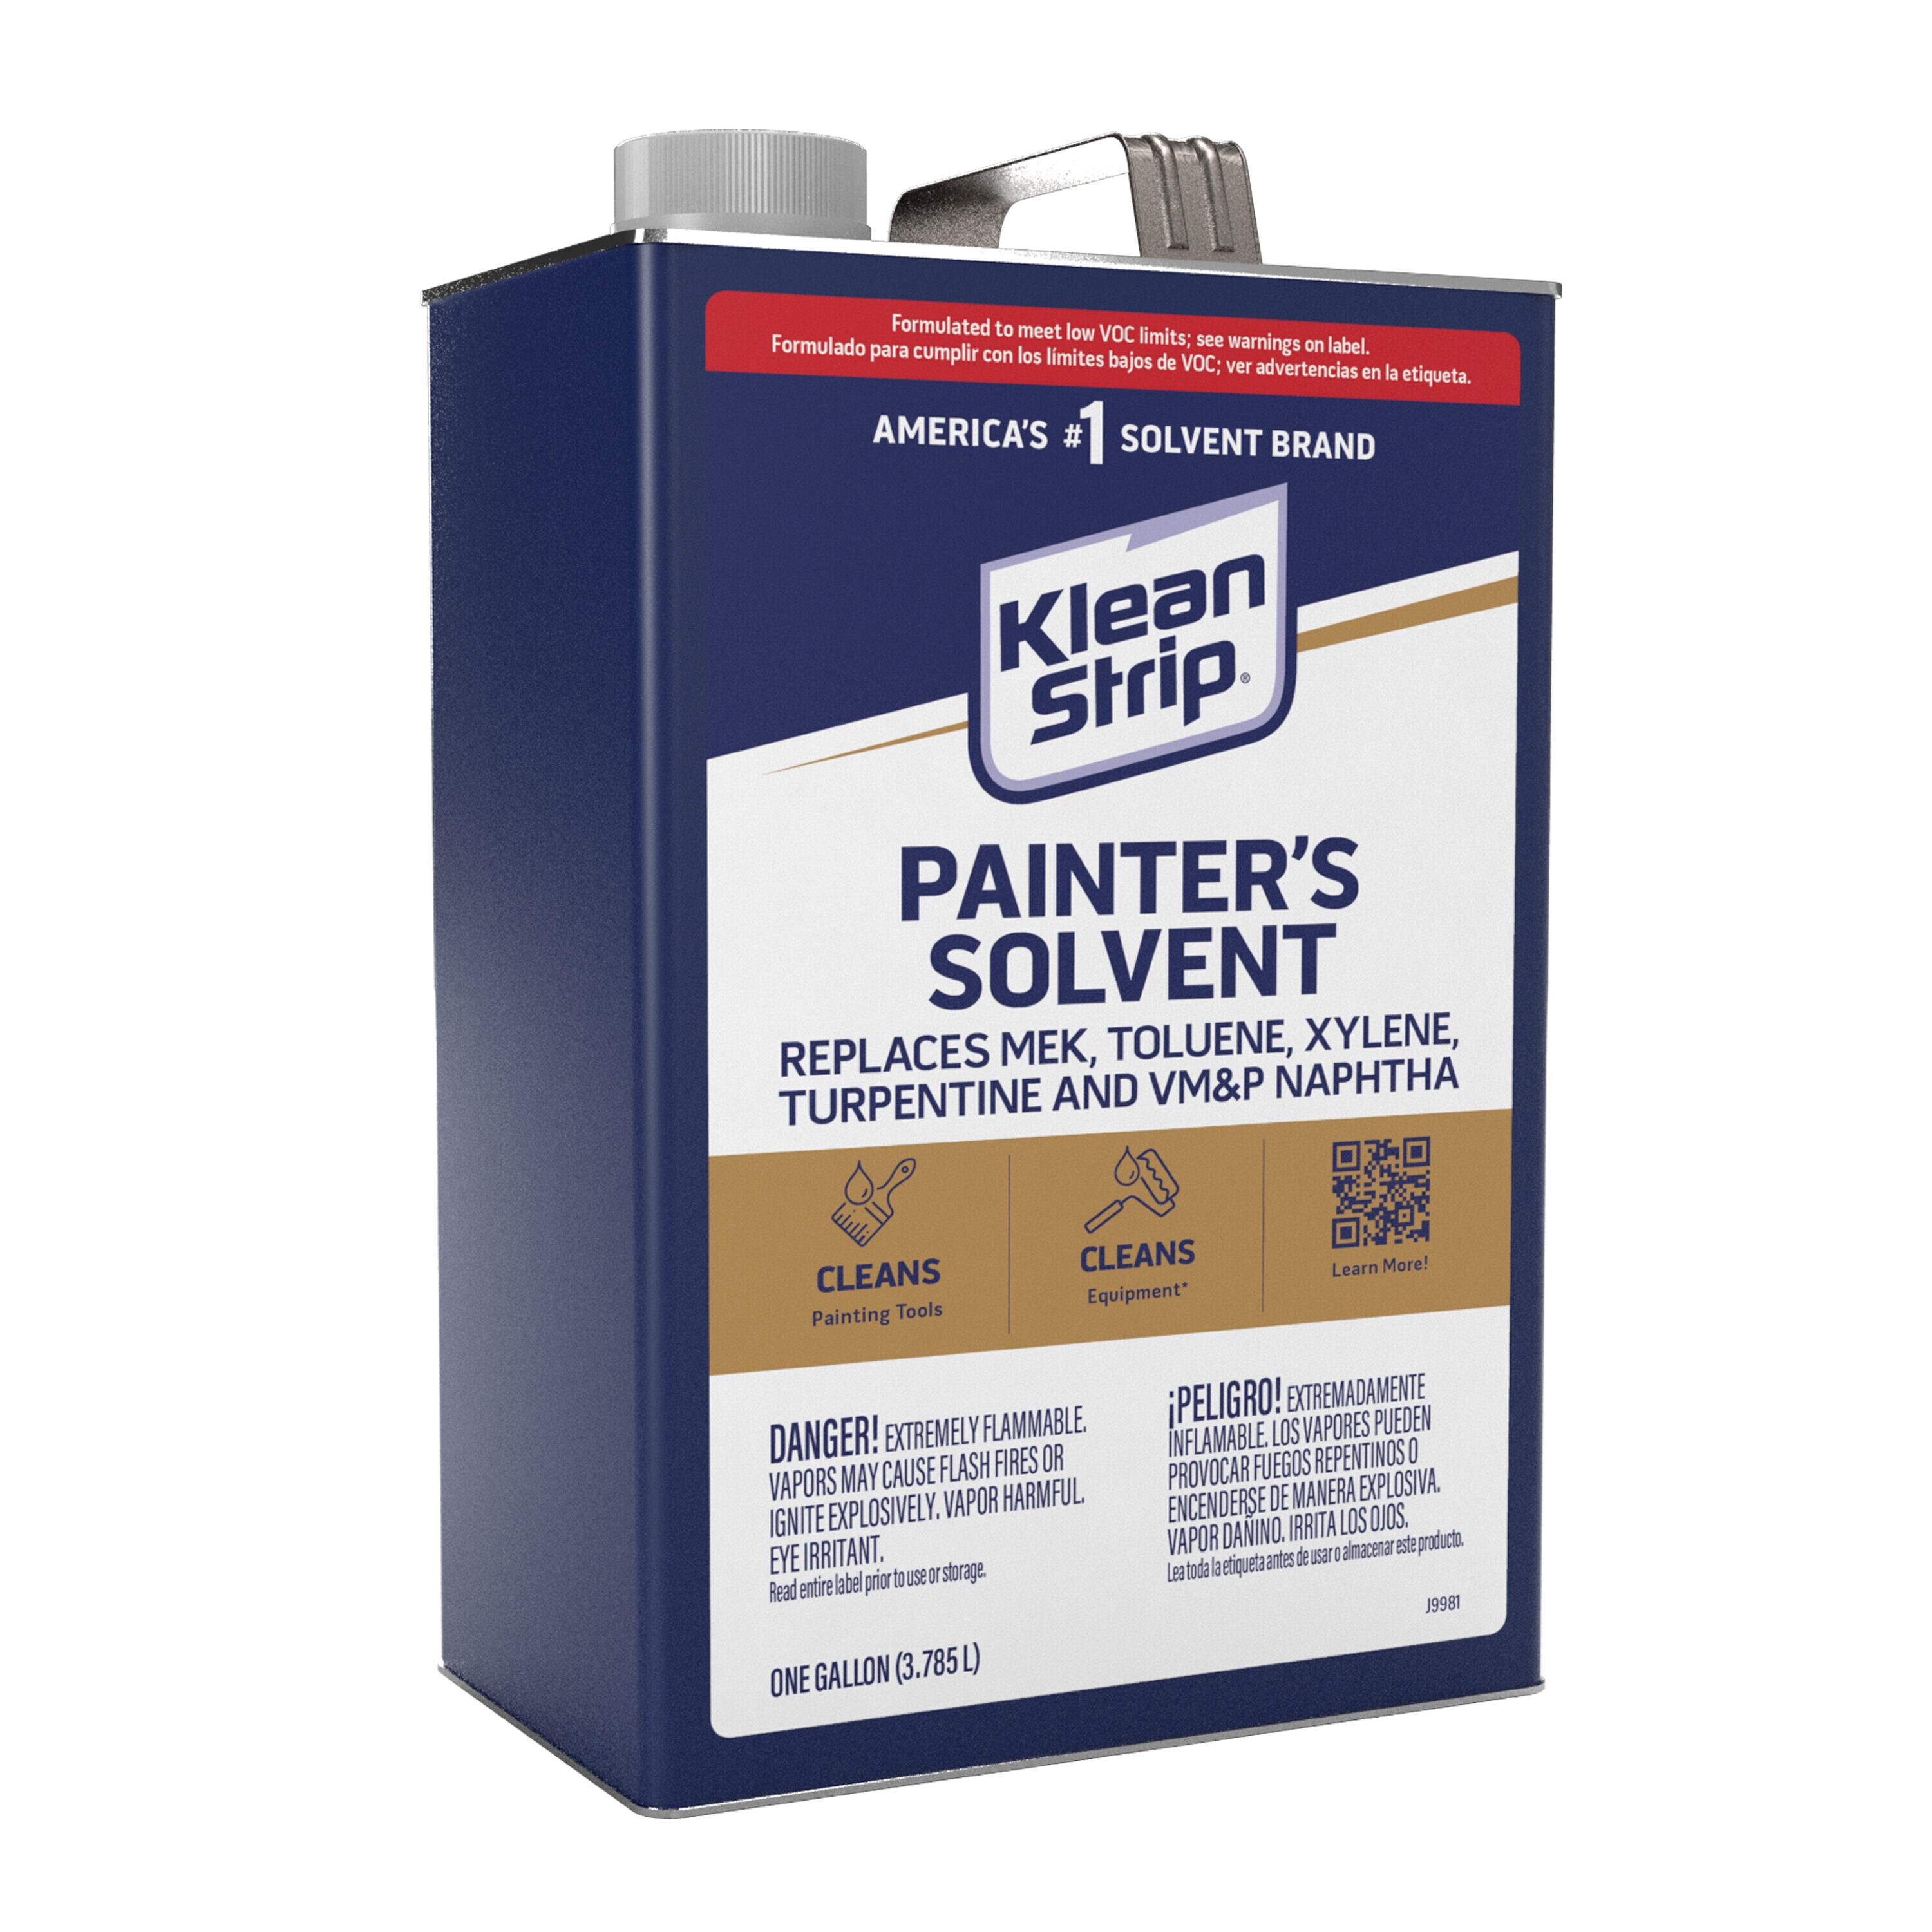 Klean-Strip Efficient Paint Brush Rescue: Cleans Wet and Dried